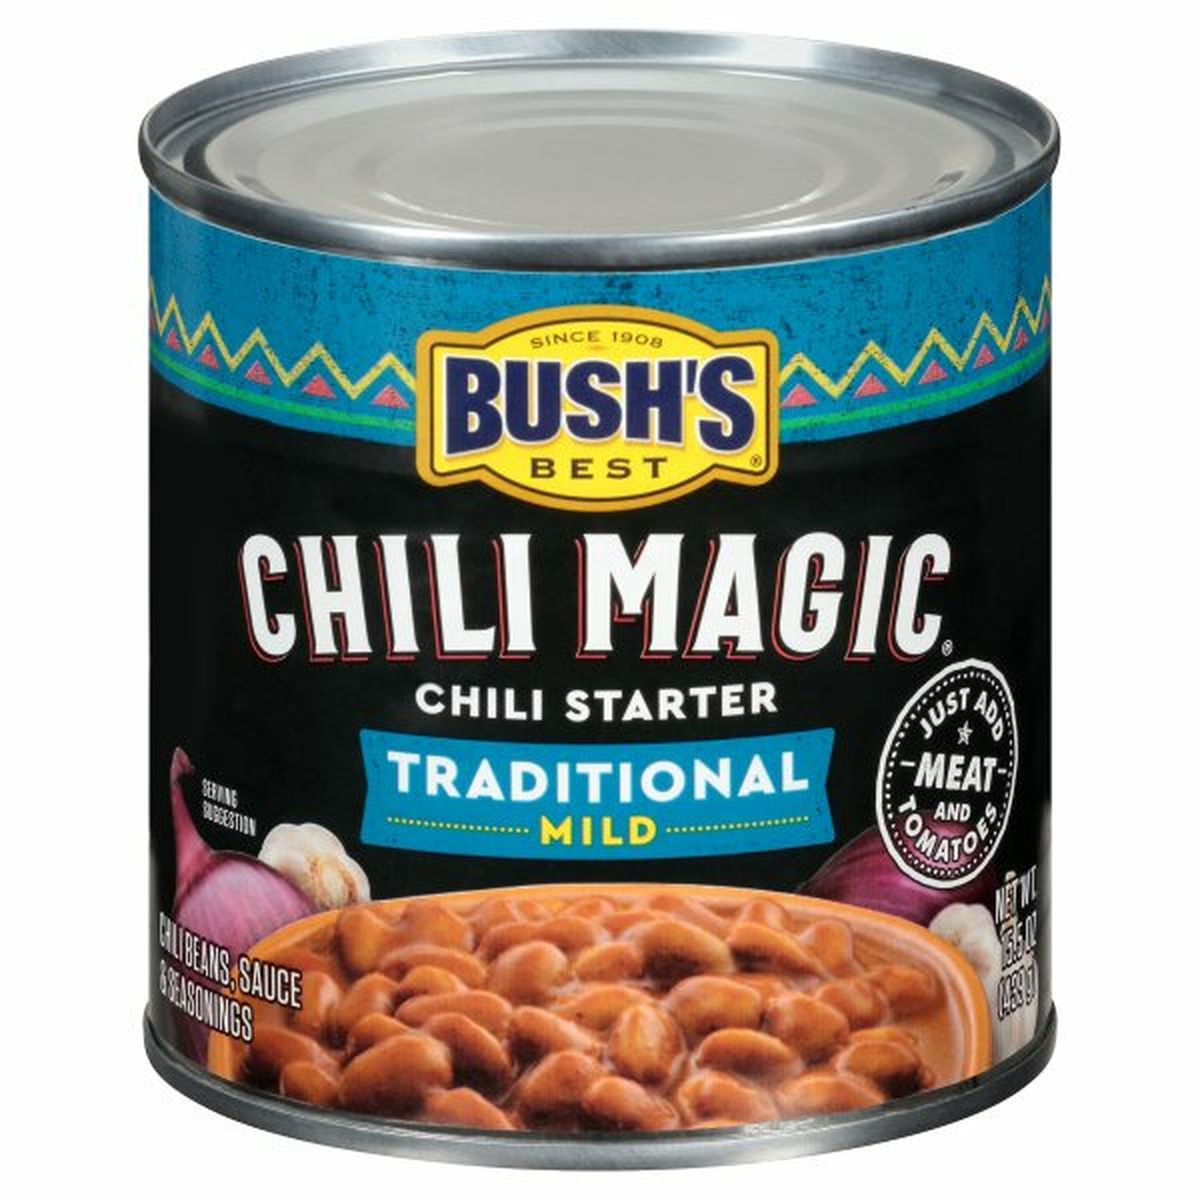 Calories in Bush's Best Chili Magic Chili Starter, Traditional, Mild